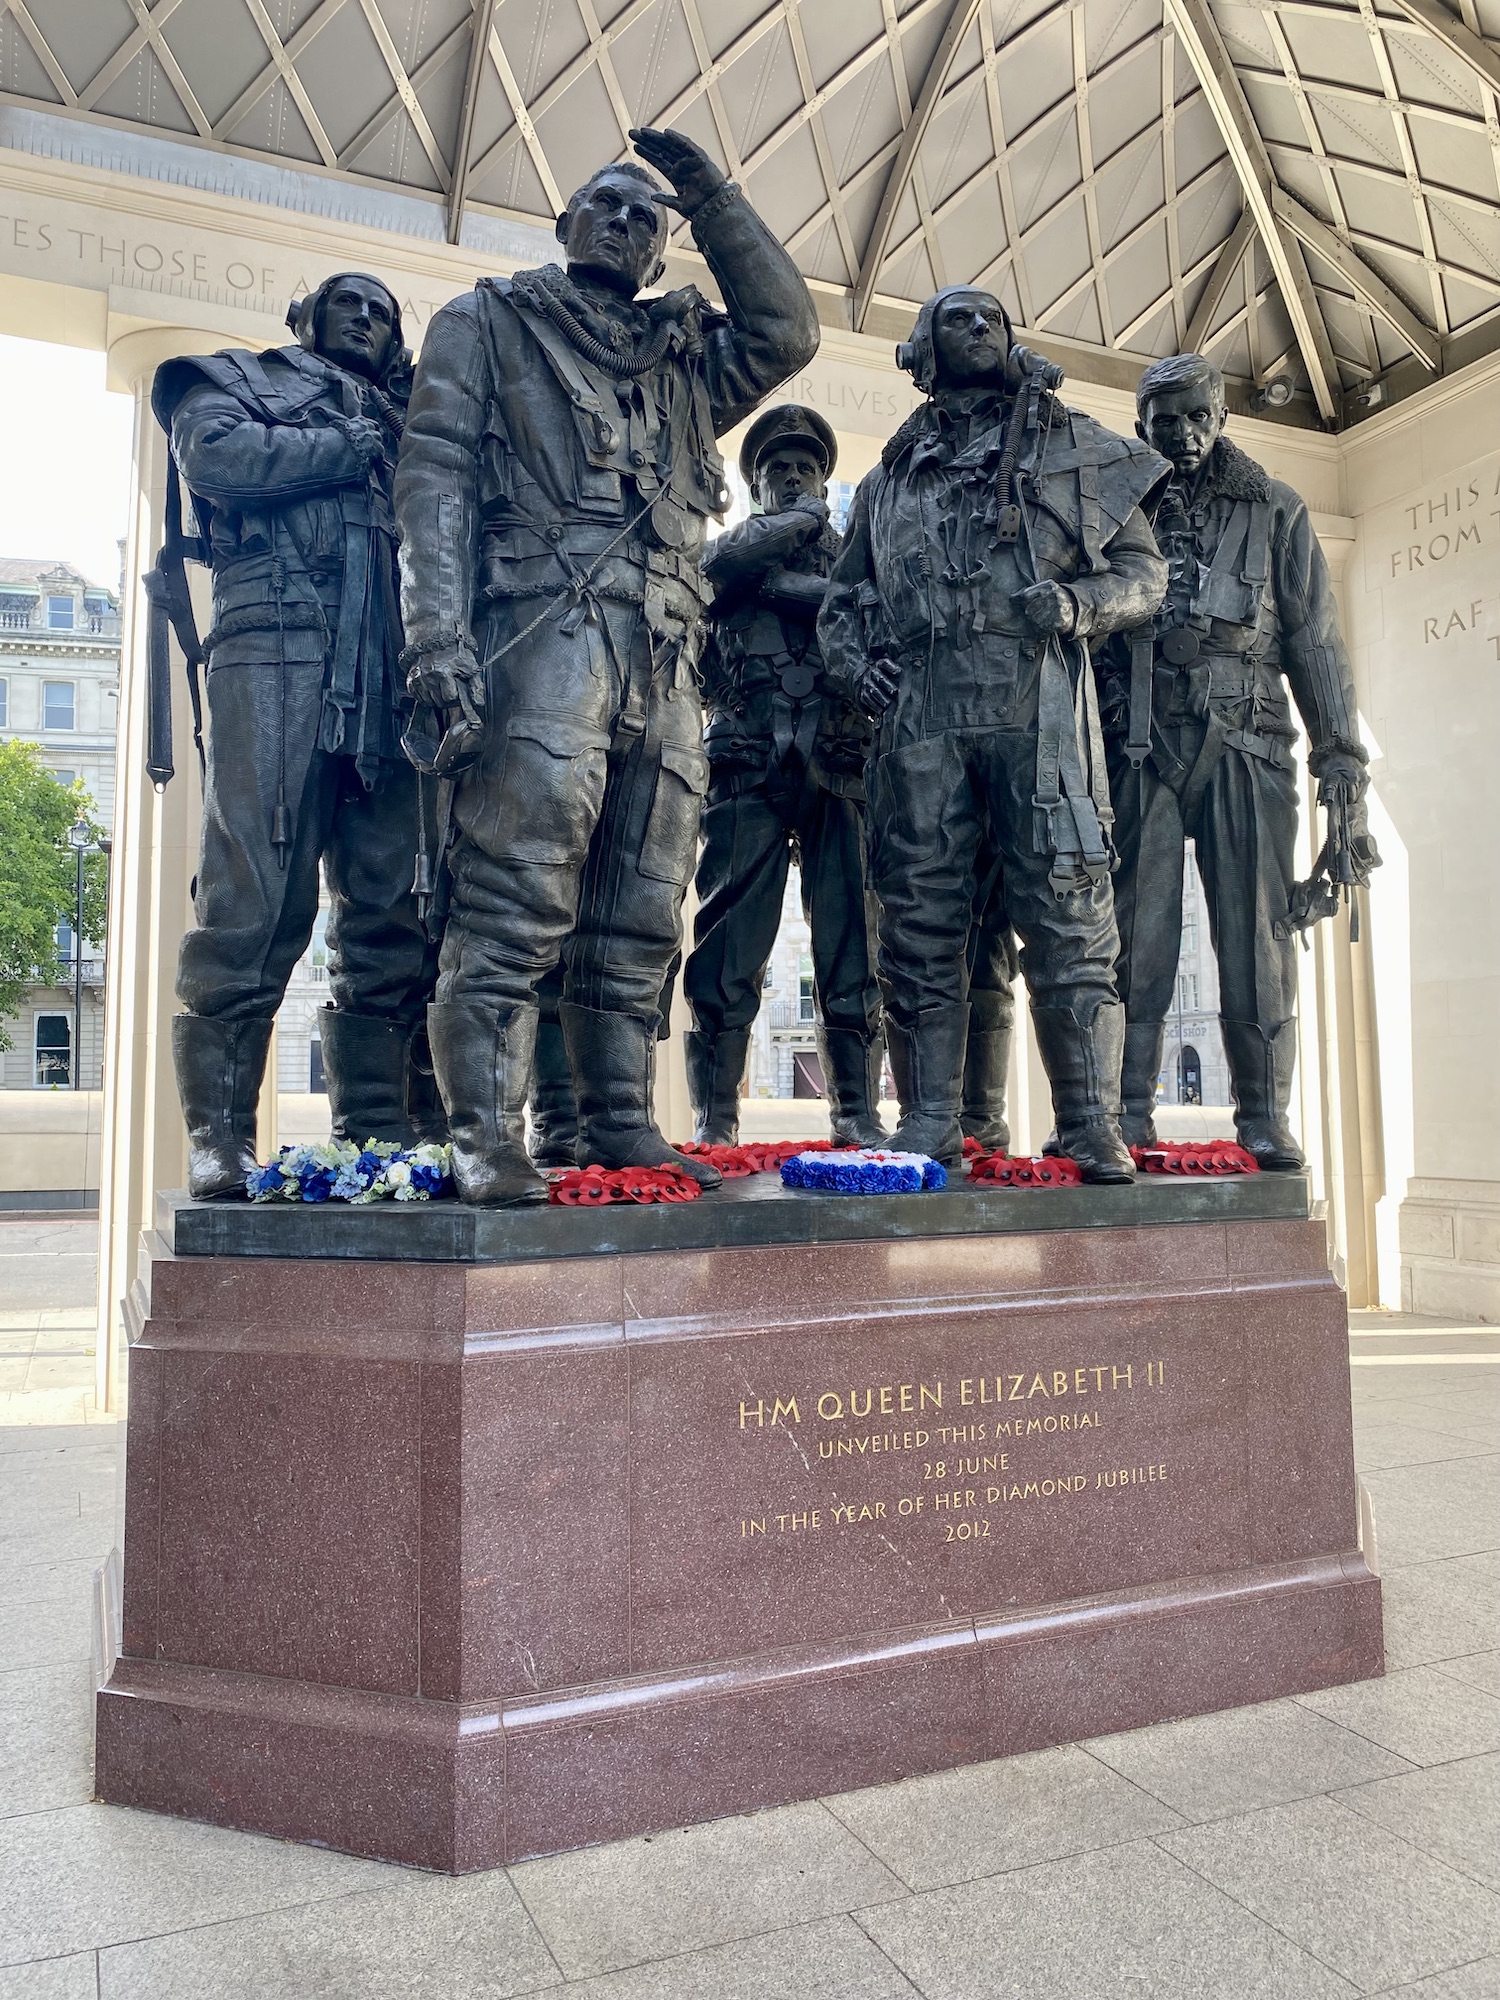 Bomber command memorial in London